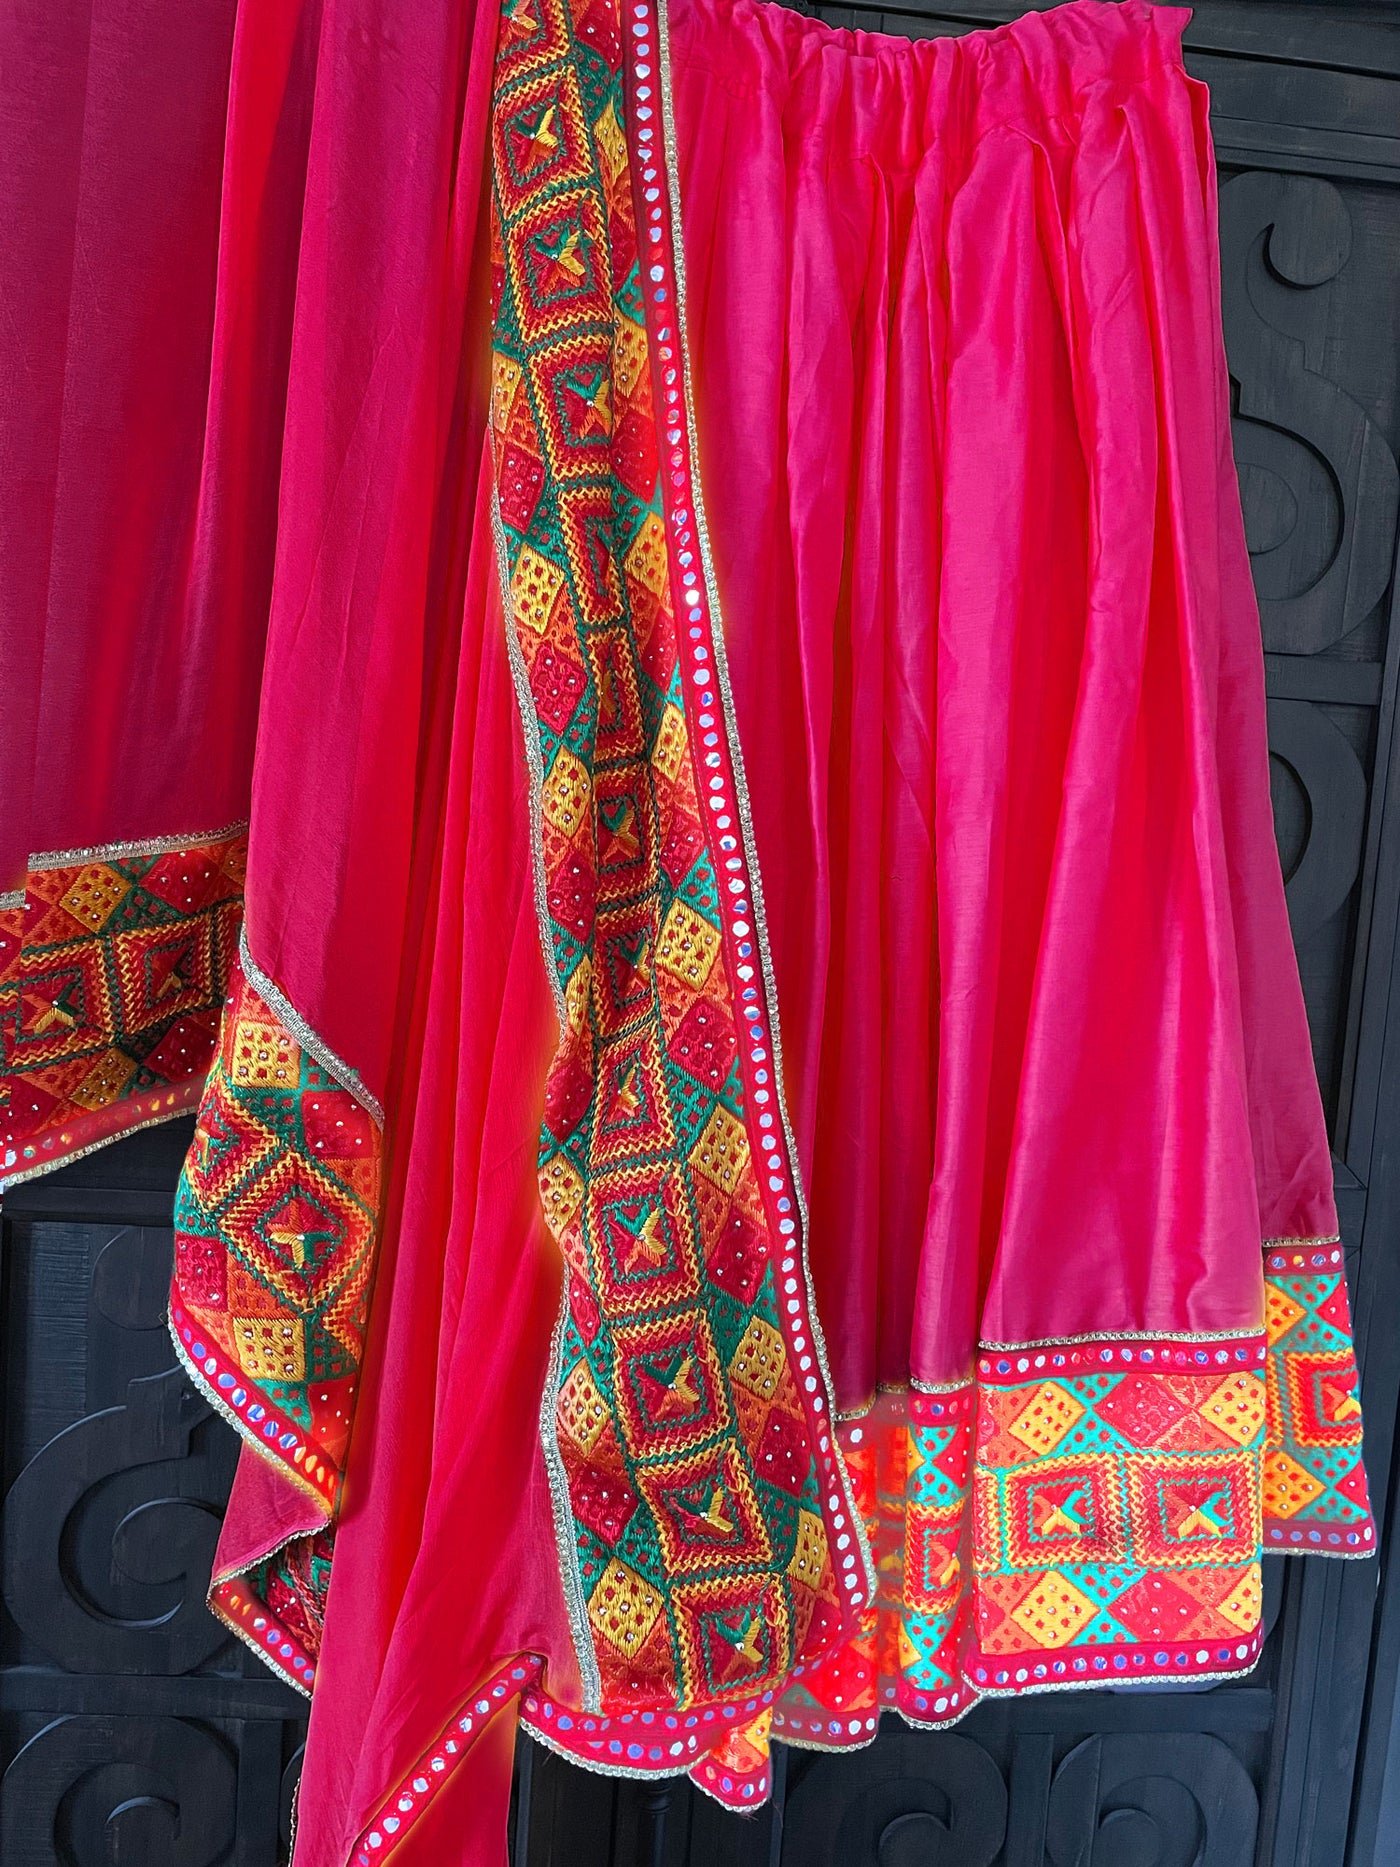 Shop Party Wear Punjabi Suits Online at the Best Price | Libas